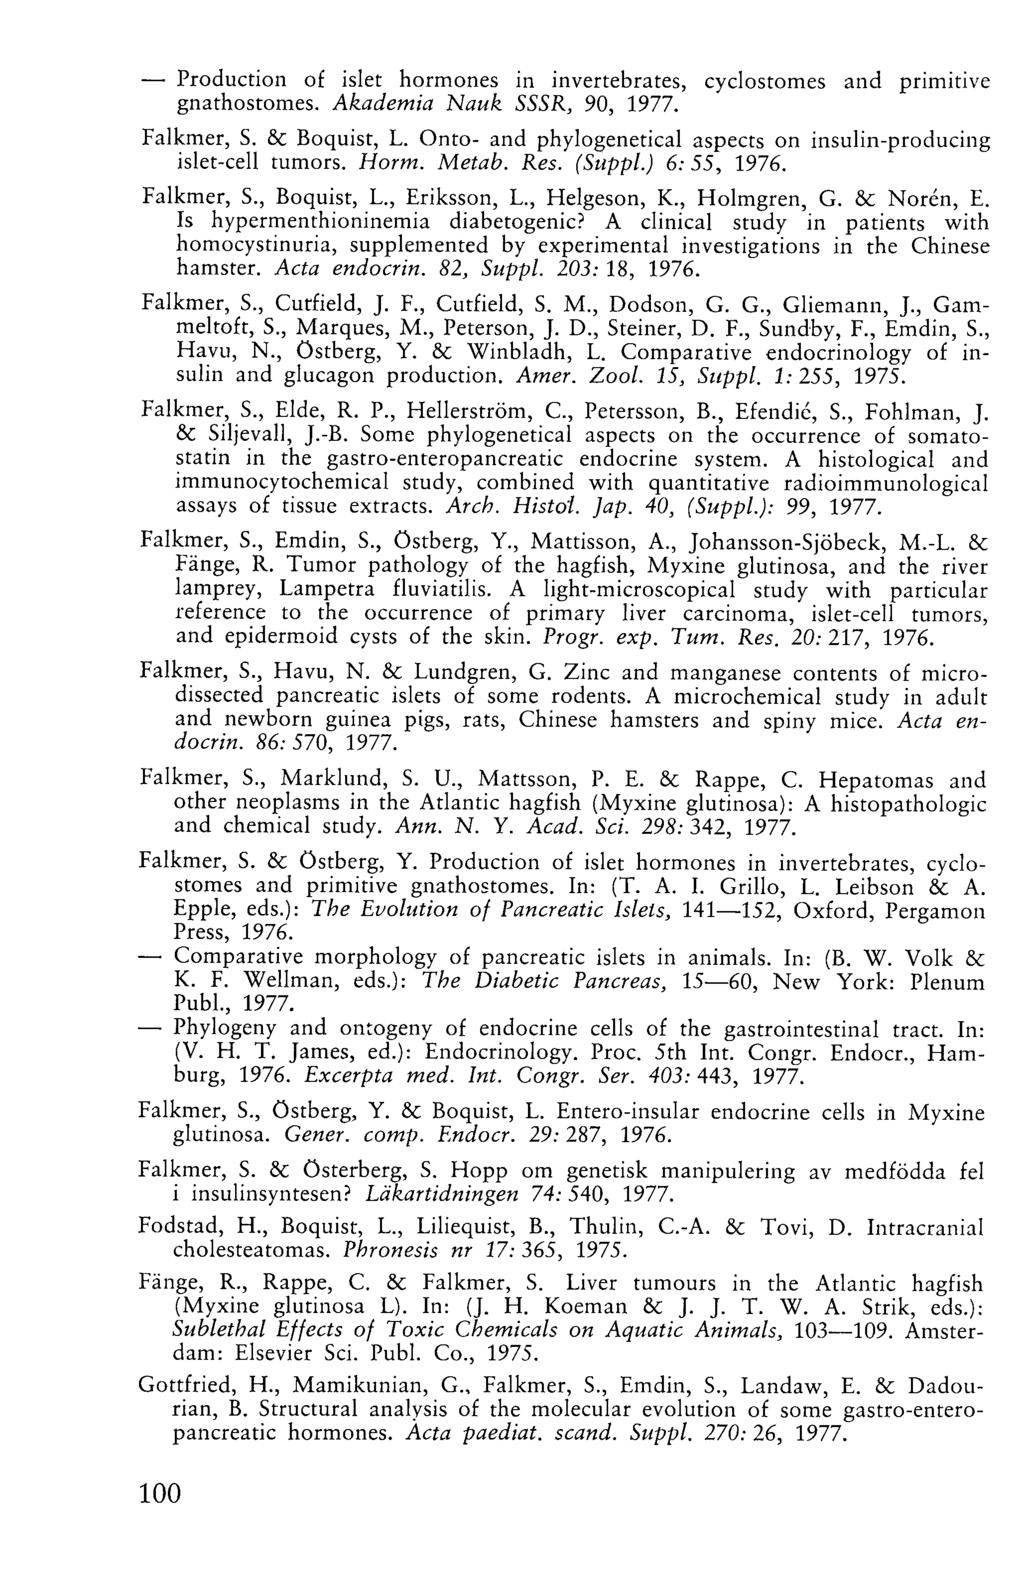 Production of islet hormones in invertebrates, cyclostomes and primitive gnathostomes. Akademia Nauk SSSR, 90, 1977. Falkmer, S. &c Boquist, L.